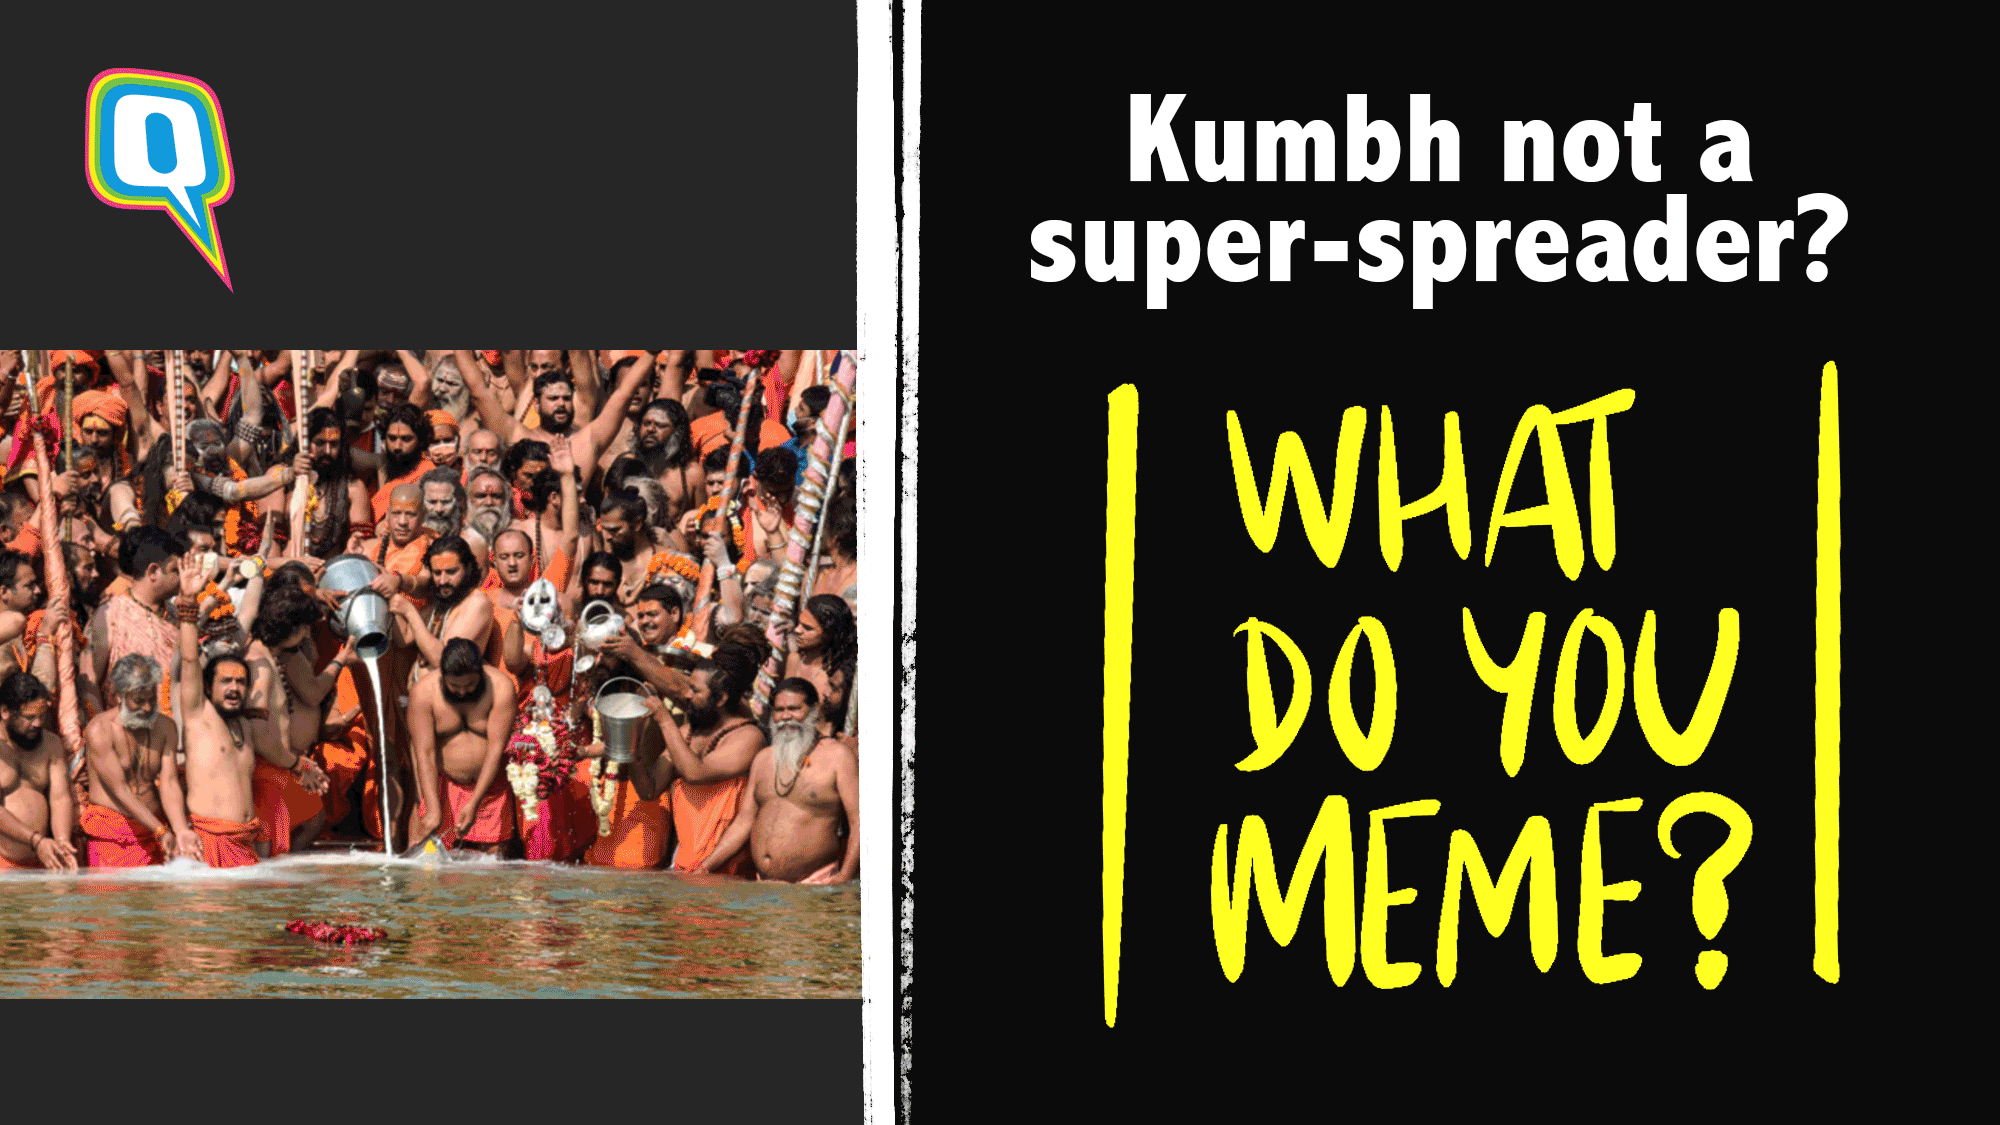 Kumbh Mela not a super-spreader? Hmmm.